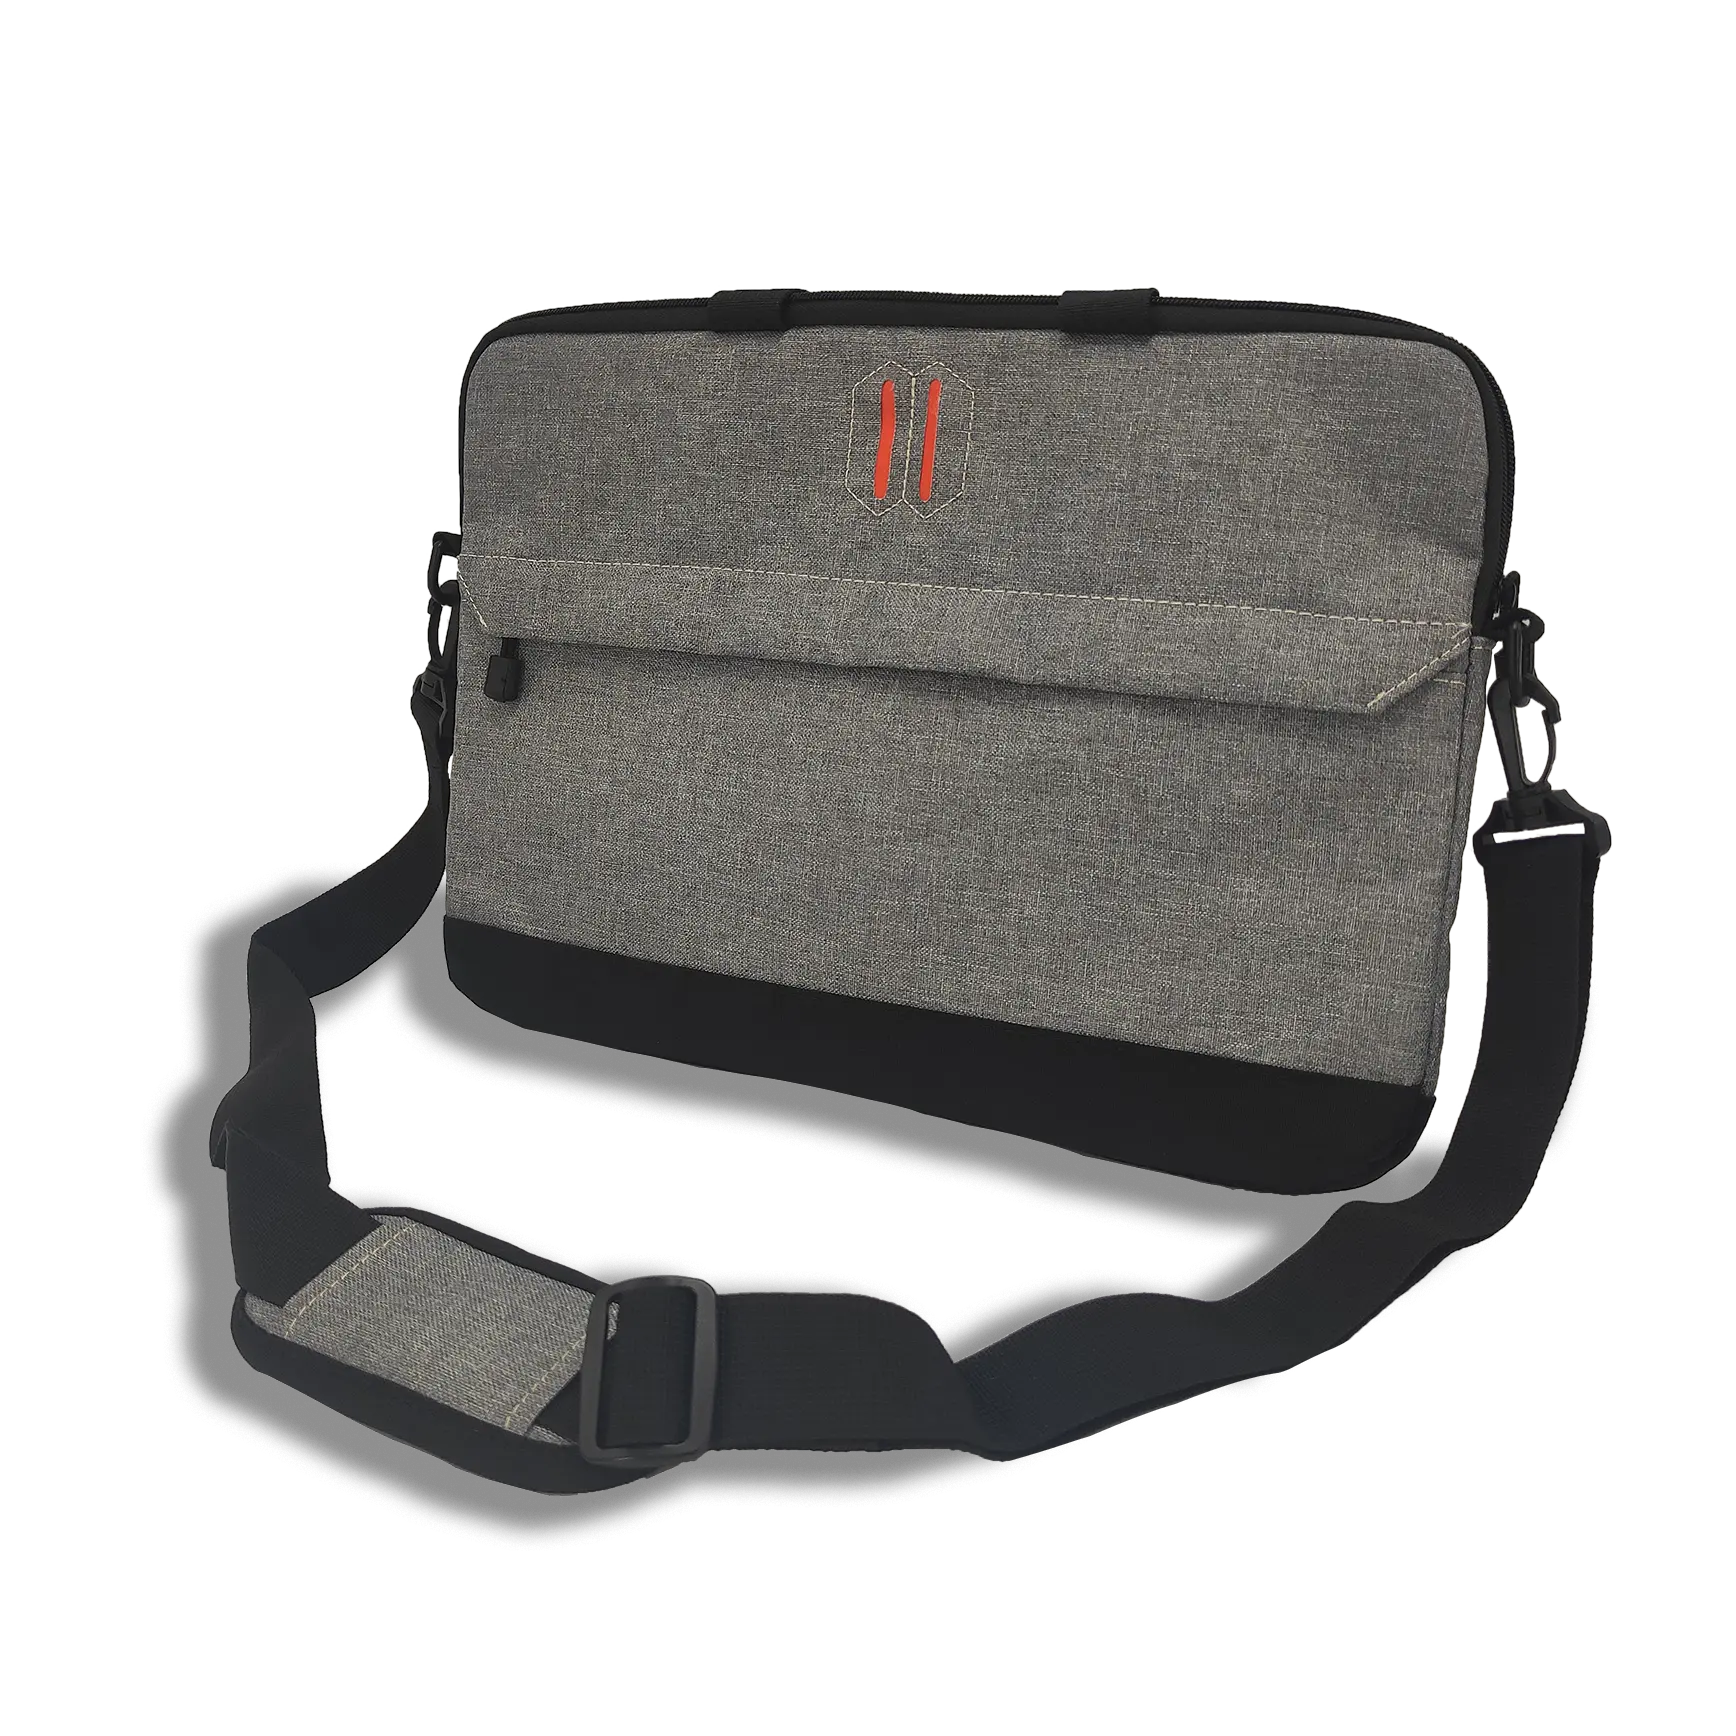 Shoulder Laptop Bag Gift For Men Light Weight Computer Bags Water Proof Bag